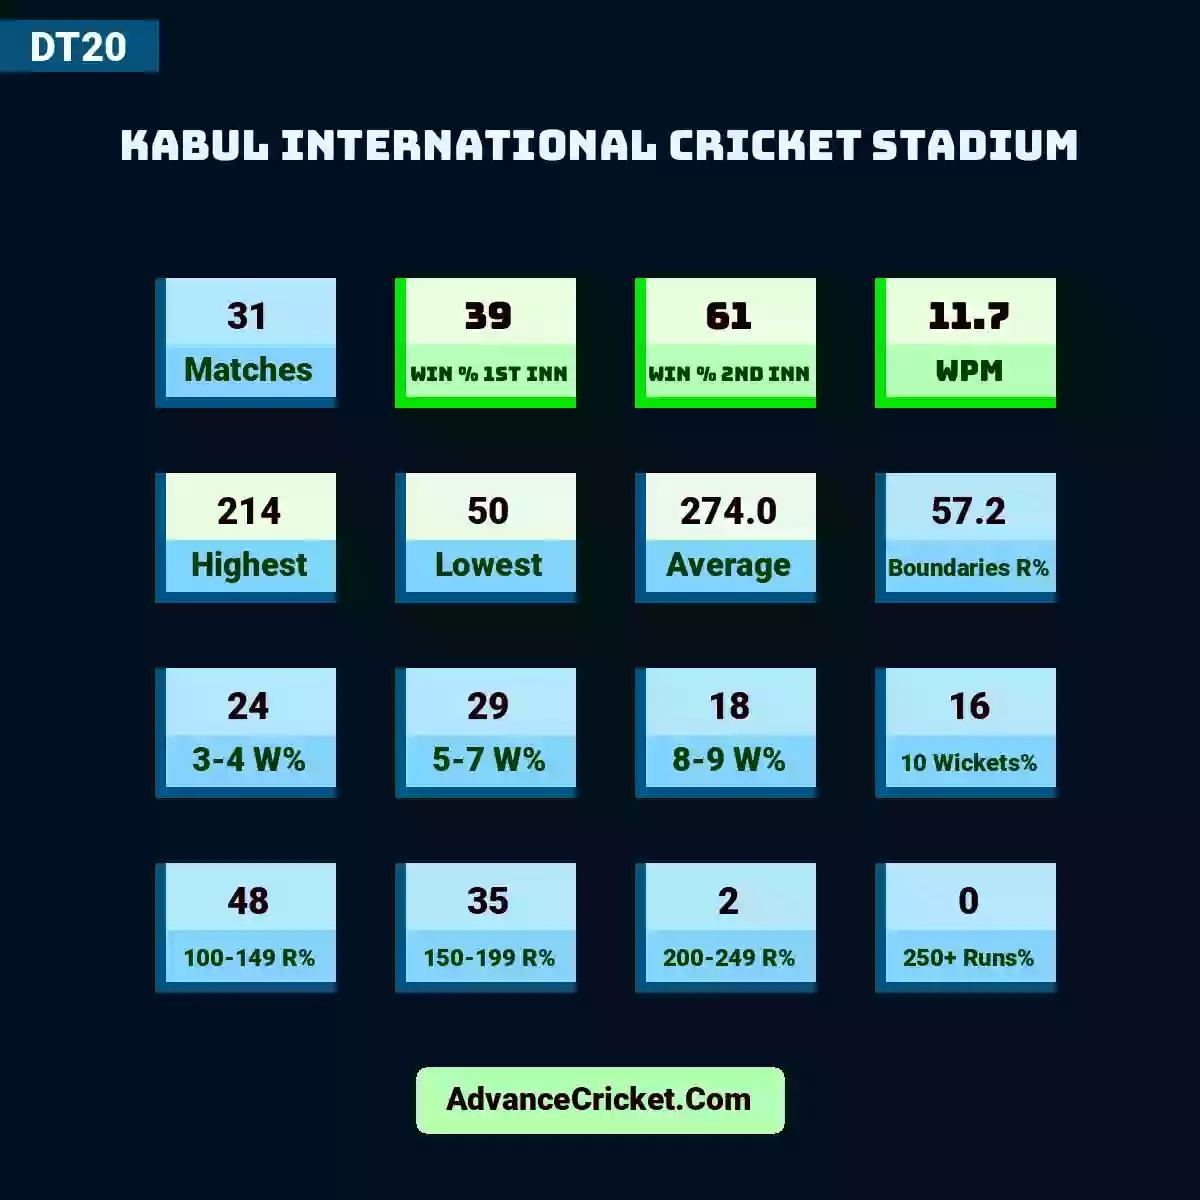 Image showing Kabul International Cricket Stadium with Matches: 31, Win % 1st Inn: 39, Win % 2nd Inn: 61, WPM: 11.7, Highest: 214, Lowest: 50, Average: 274.0, Boundaries R%: 57.2, 3-4 W%: 24, 5-7 W%: 29, 8-9 W%: 18, 10 Wickets%: 16, 100-149 R%: 48, 150-199 R%: 35, 200-249 R%: 2, 250+ Runs%: 0.